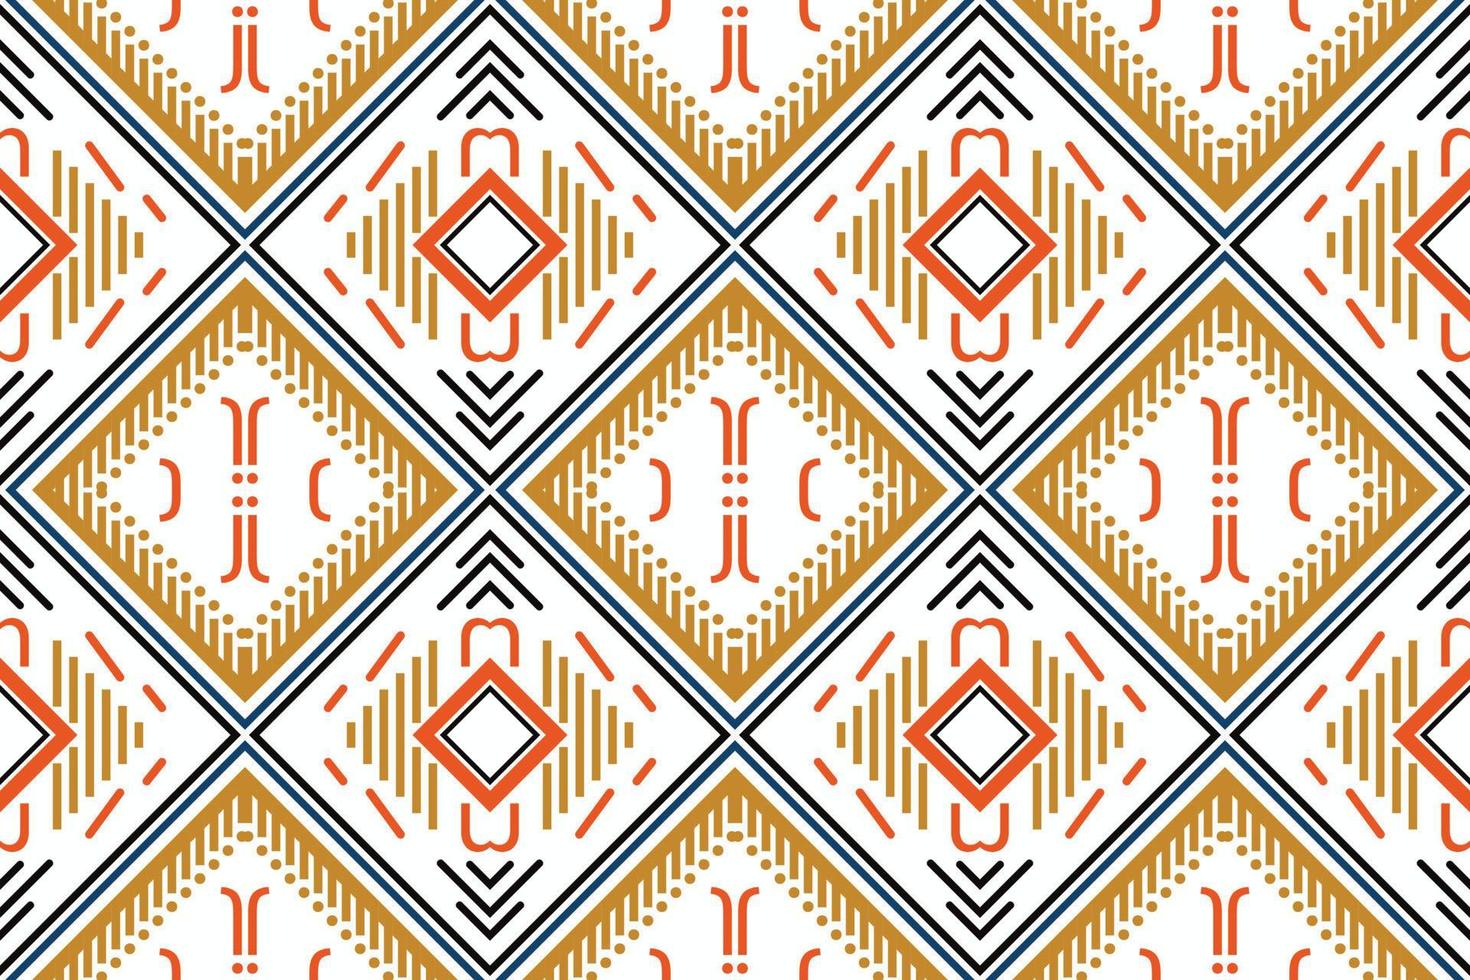 ikat patrón sin costuras ikat vector batik textil patrón sin costuras diseño de vector digital para imprimir saree kurti borneo borde de tela símbolos de pincel muestras elegantes